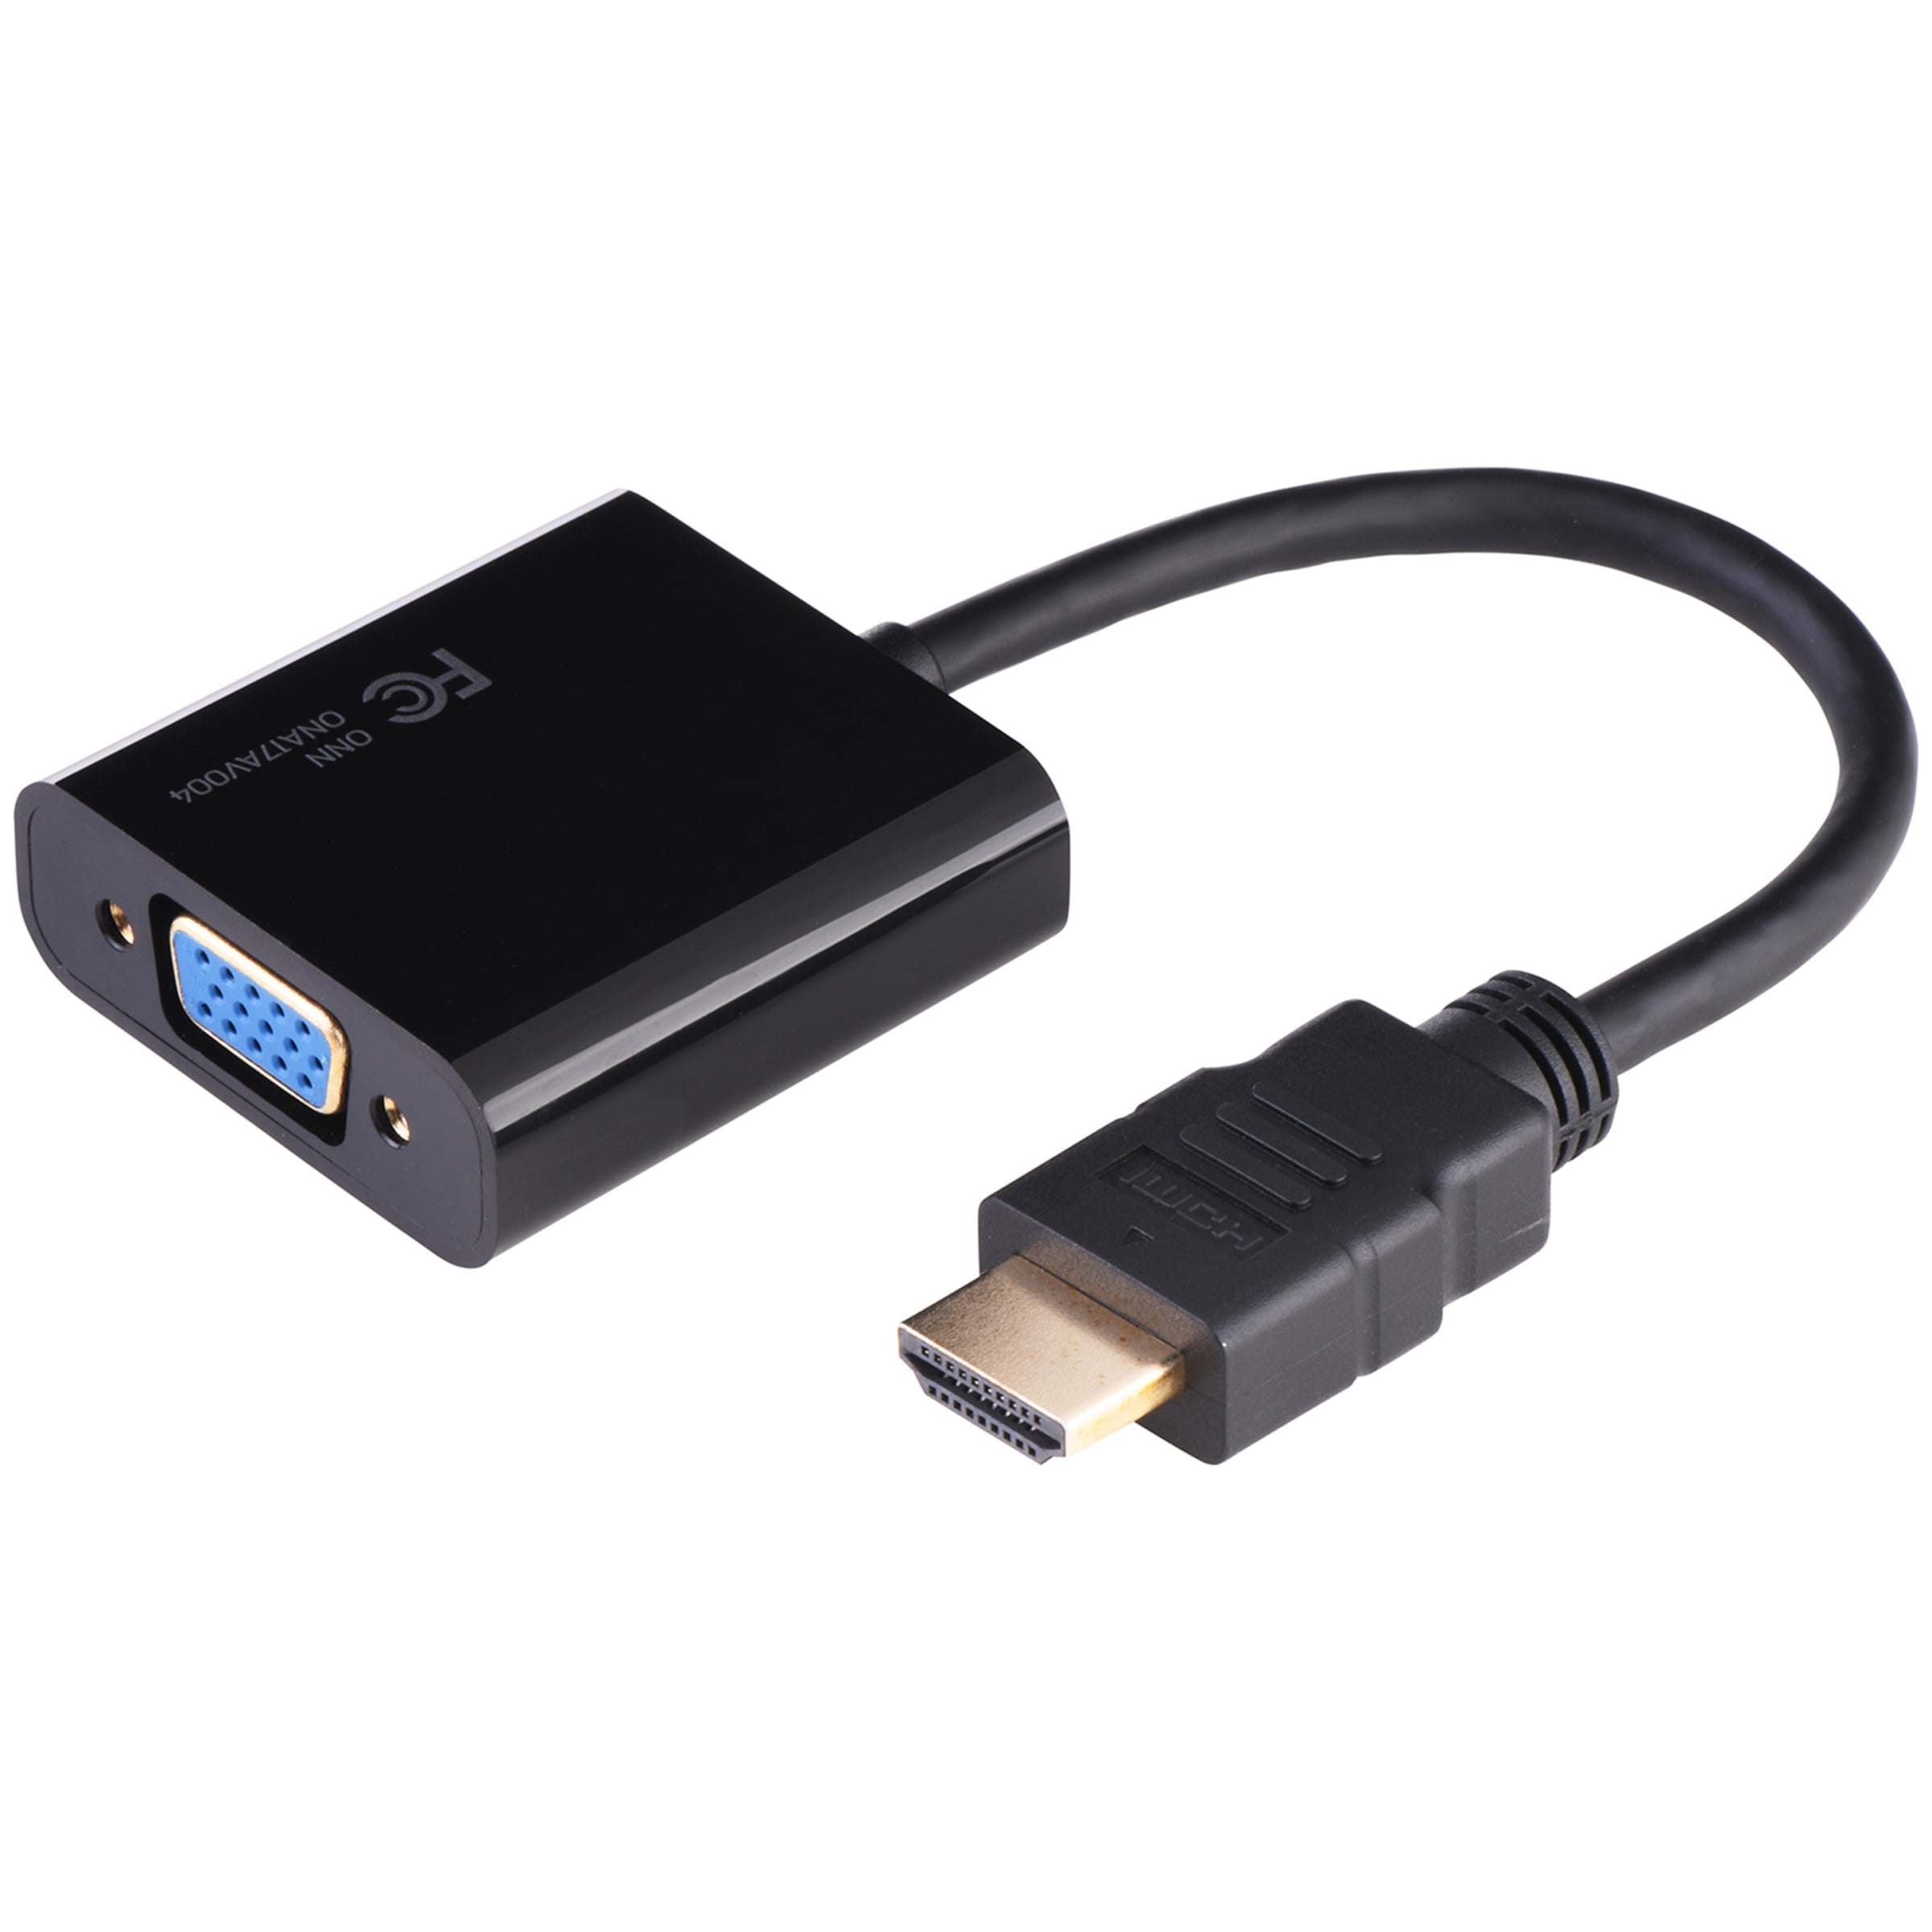 onn. HDMI To Adapter Connector - Walmart.com